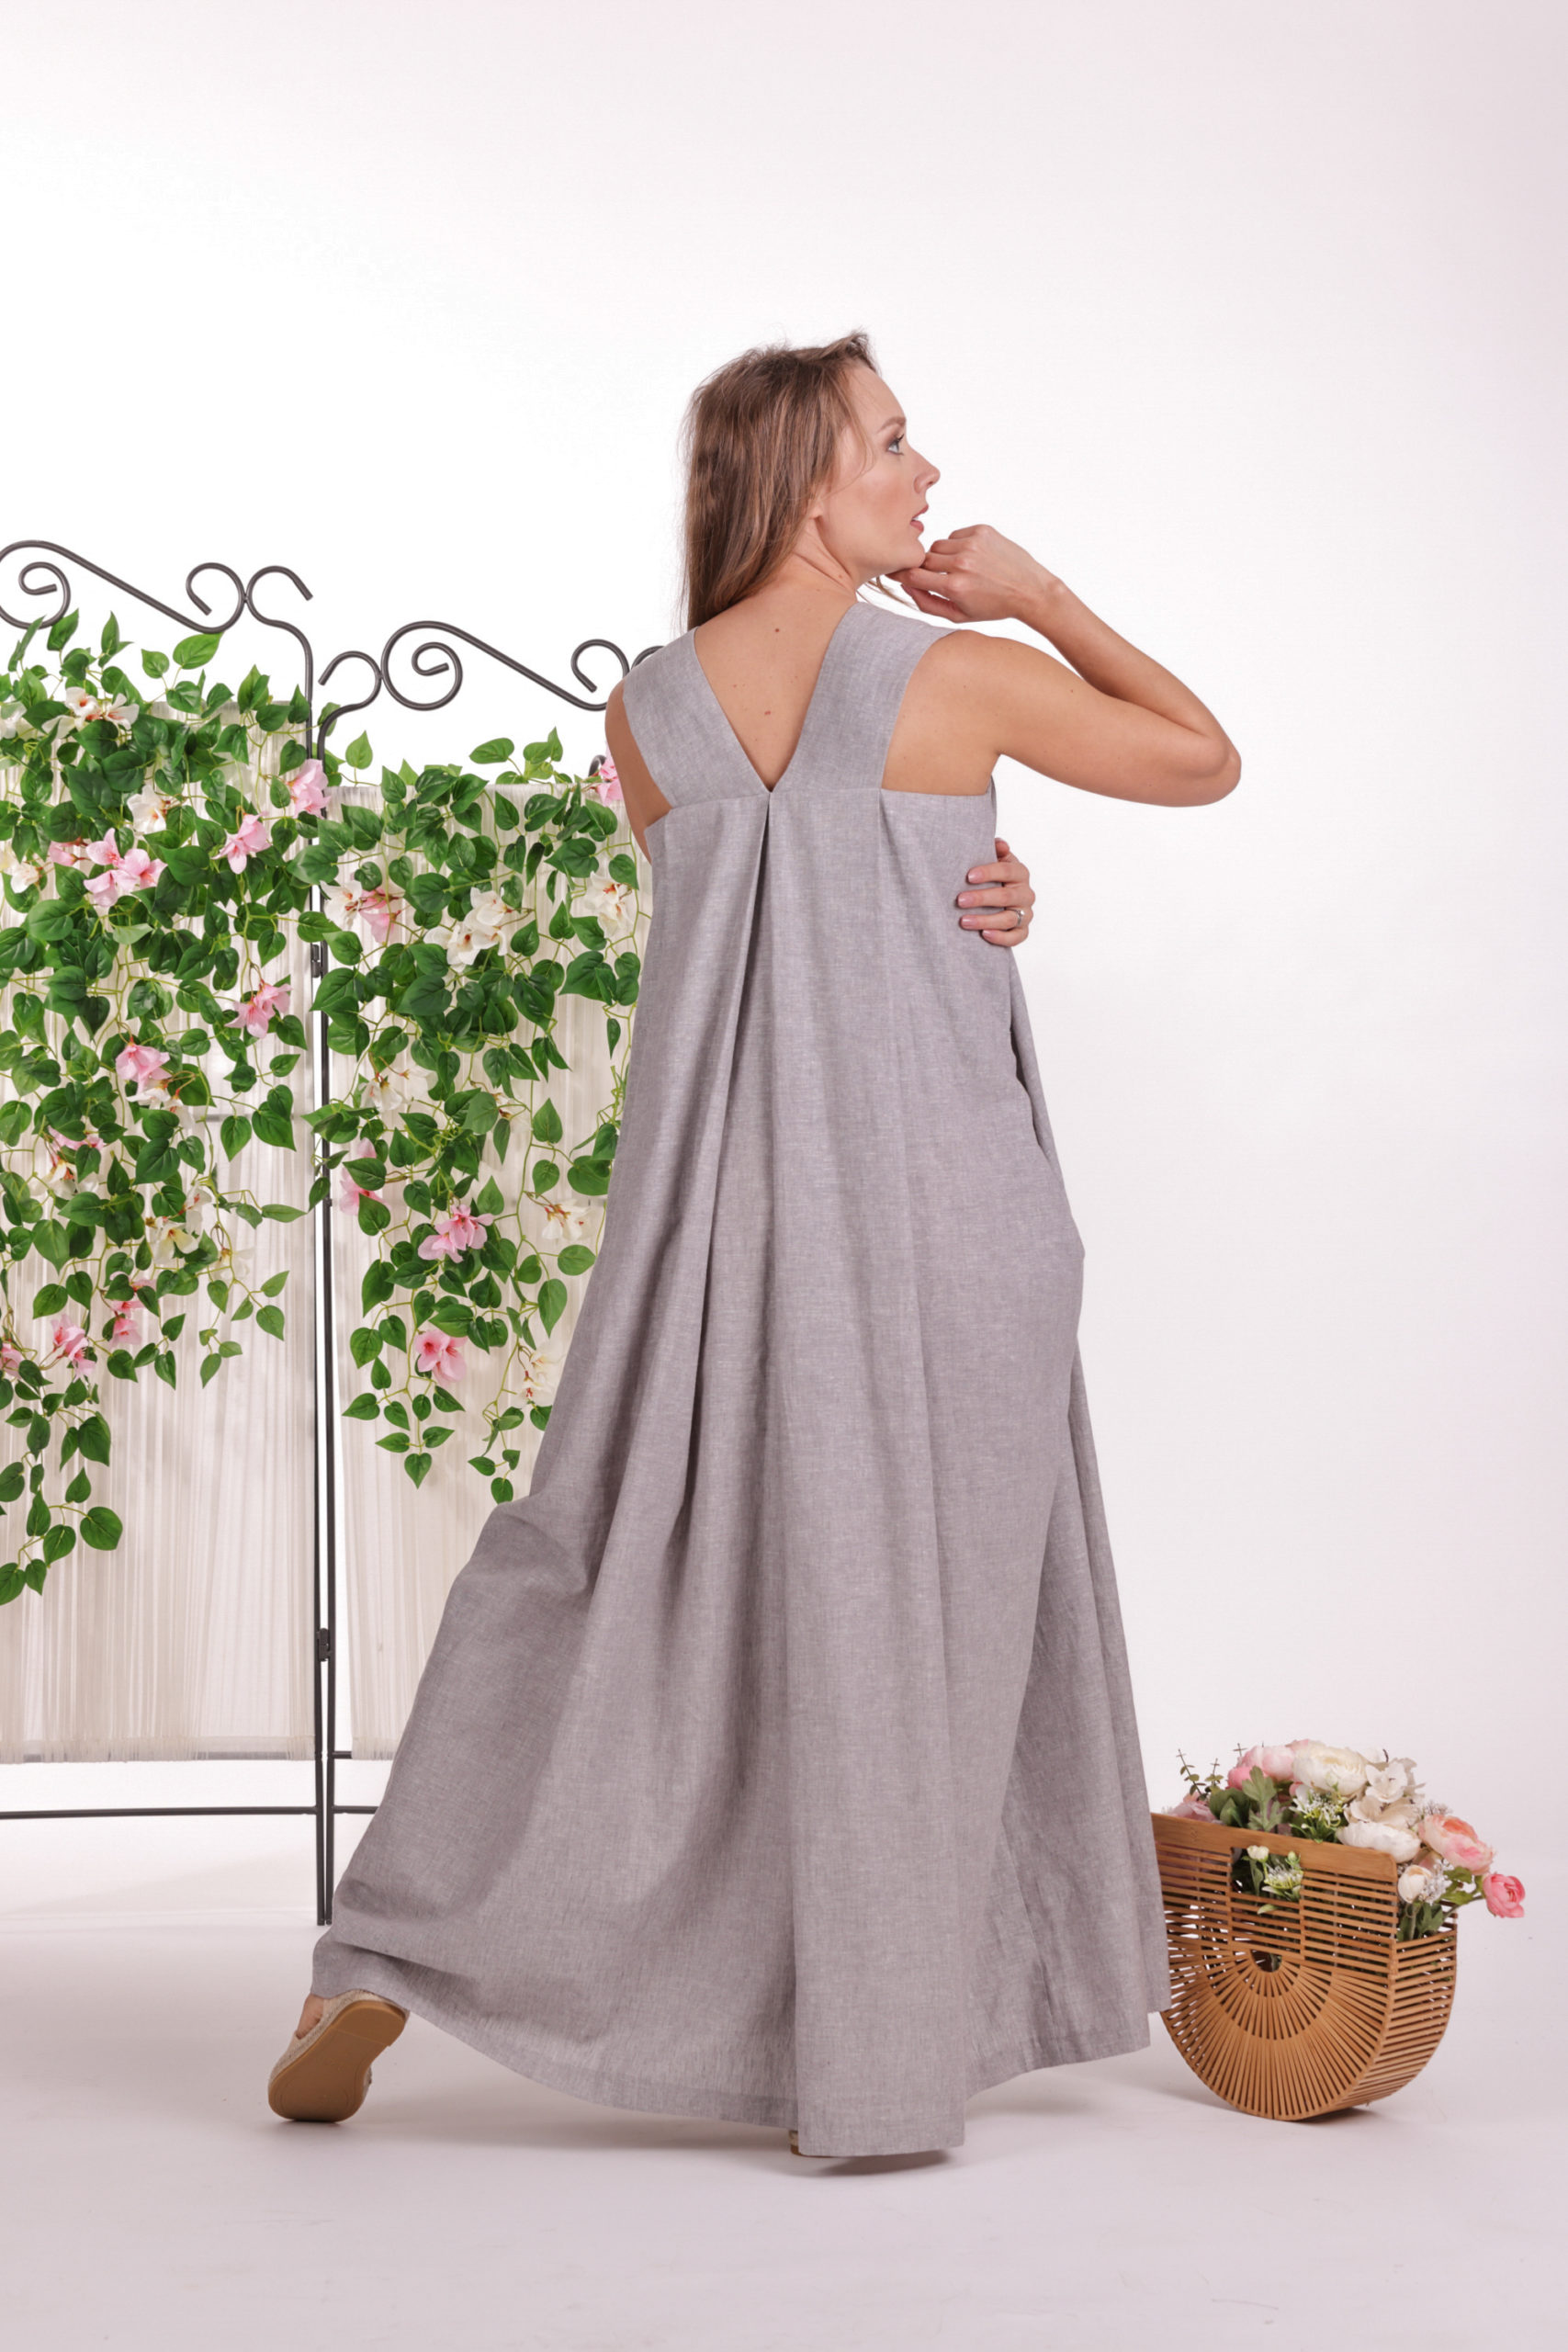 Apron Linen Dress